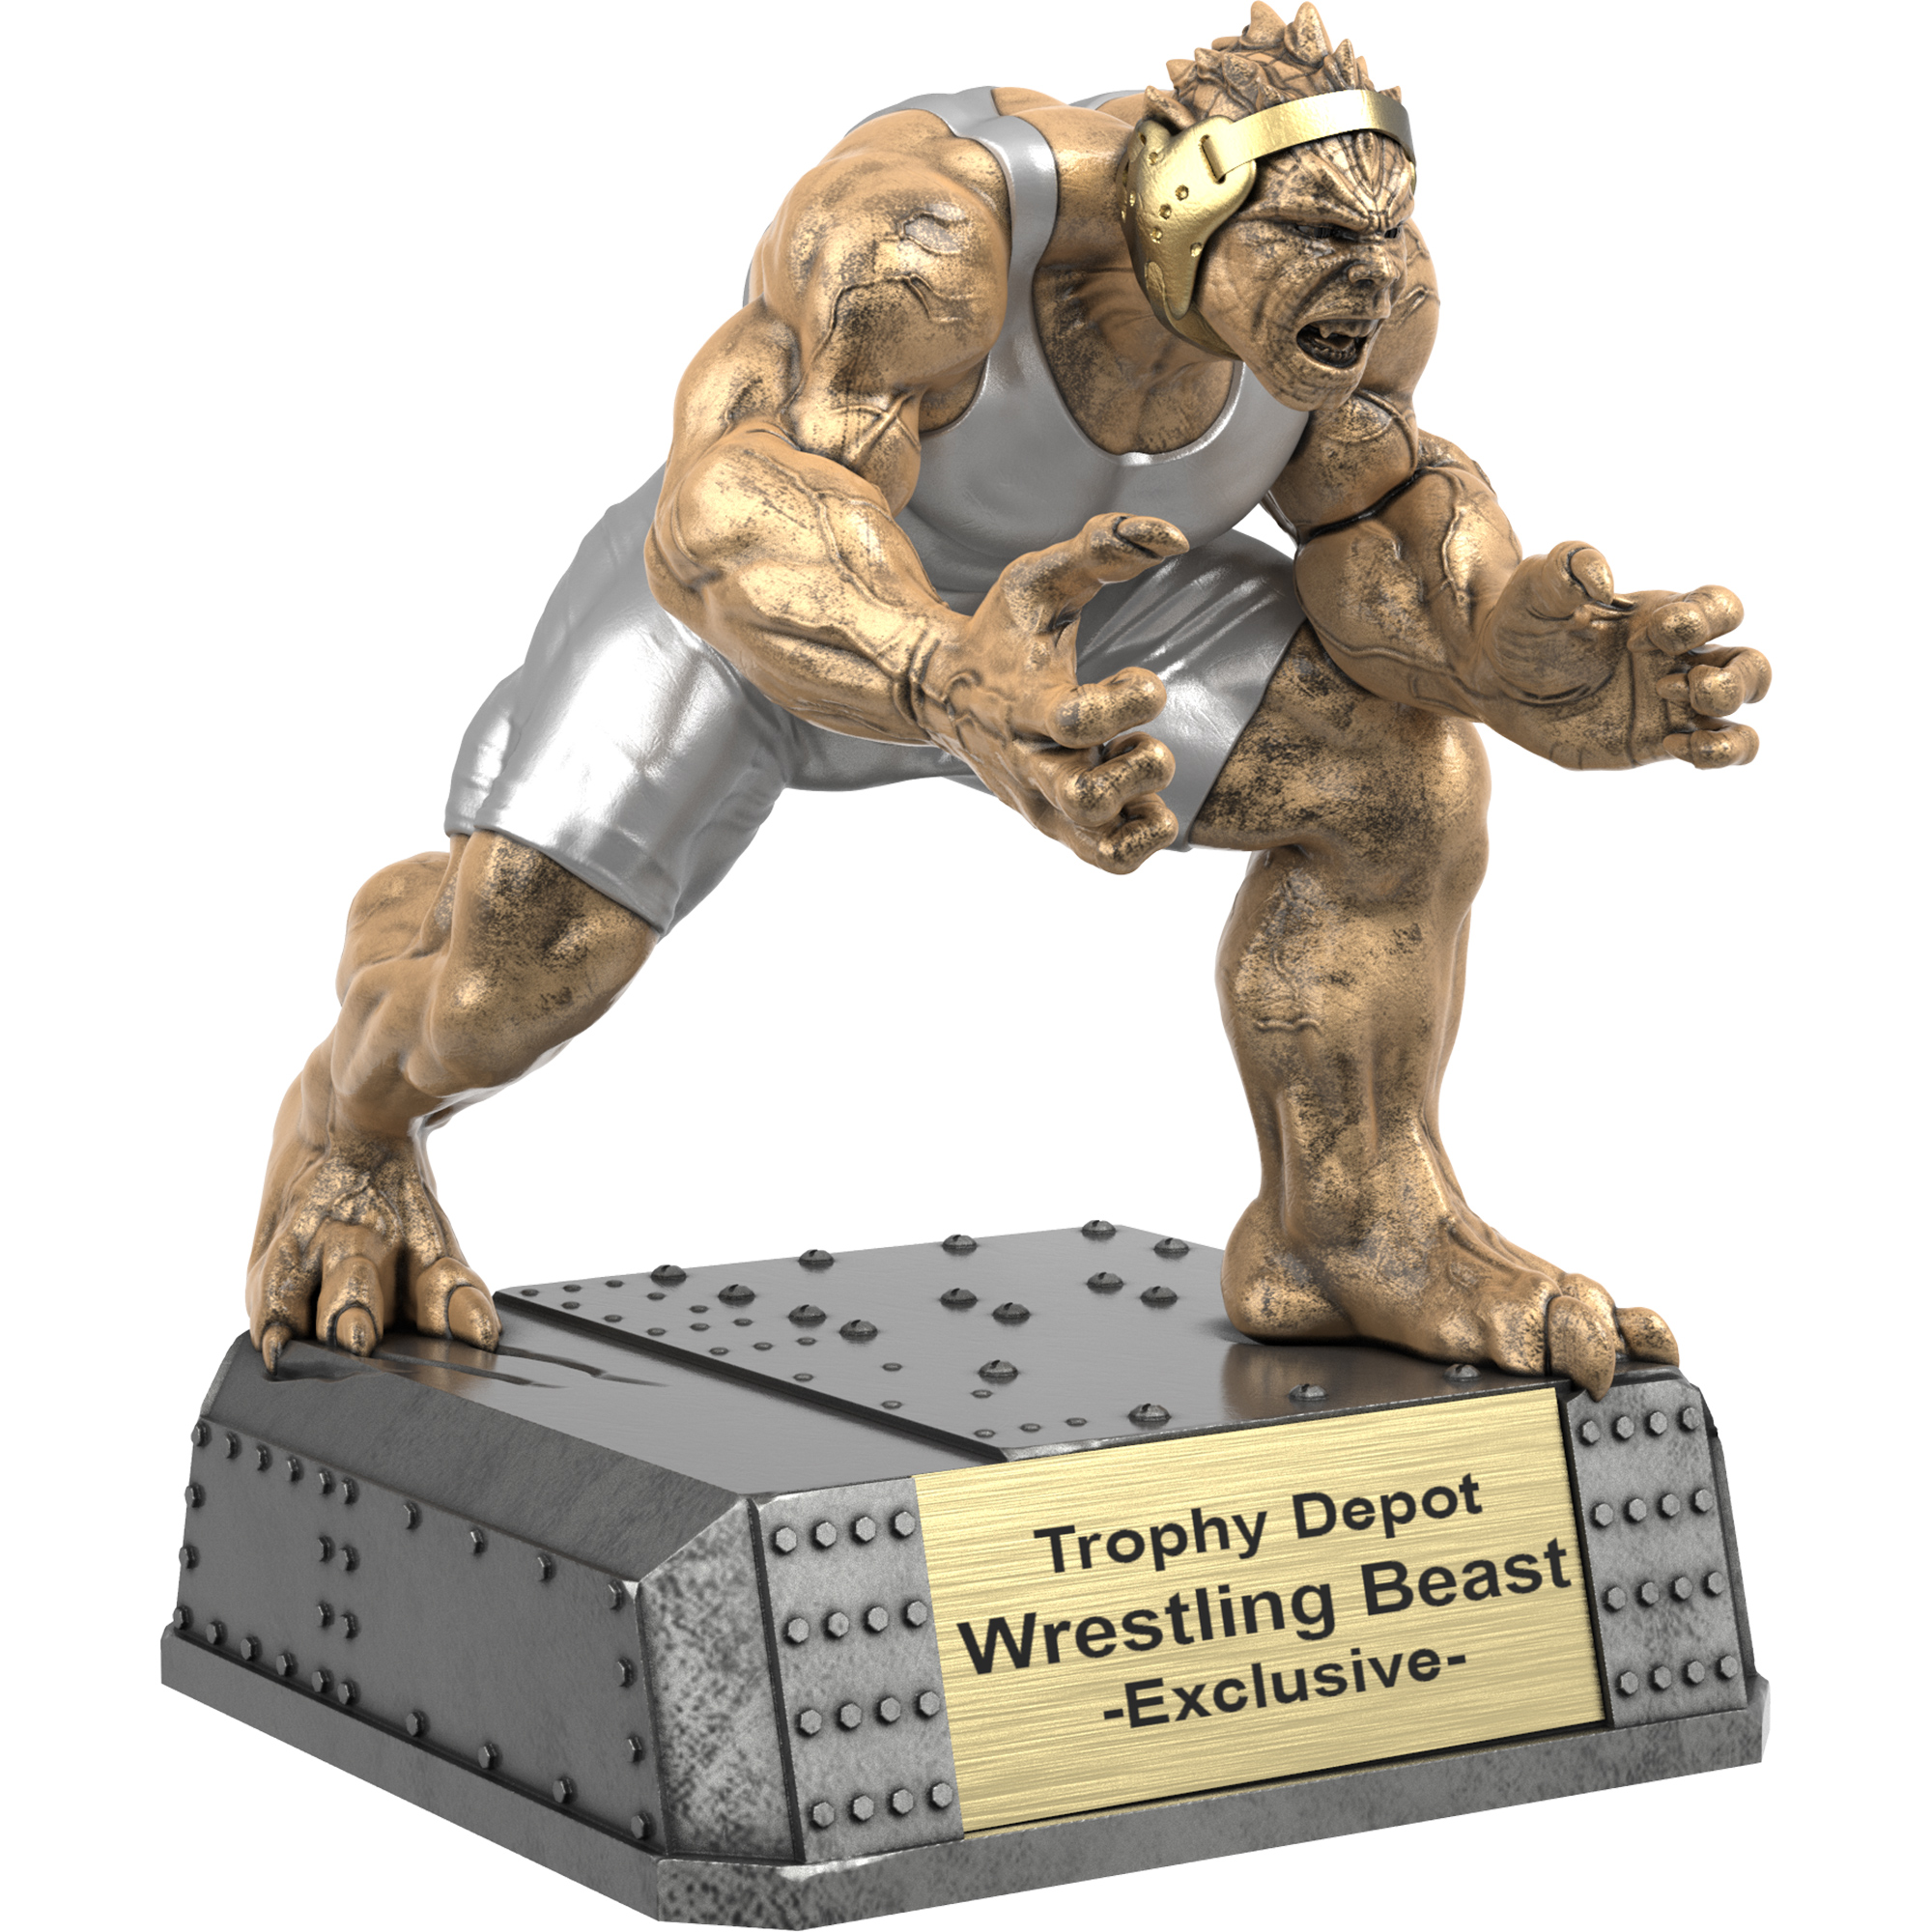 Wrestling Beast, Monster Sculpture Trophy - 6 inch